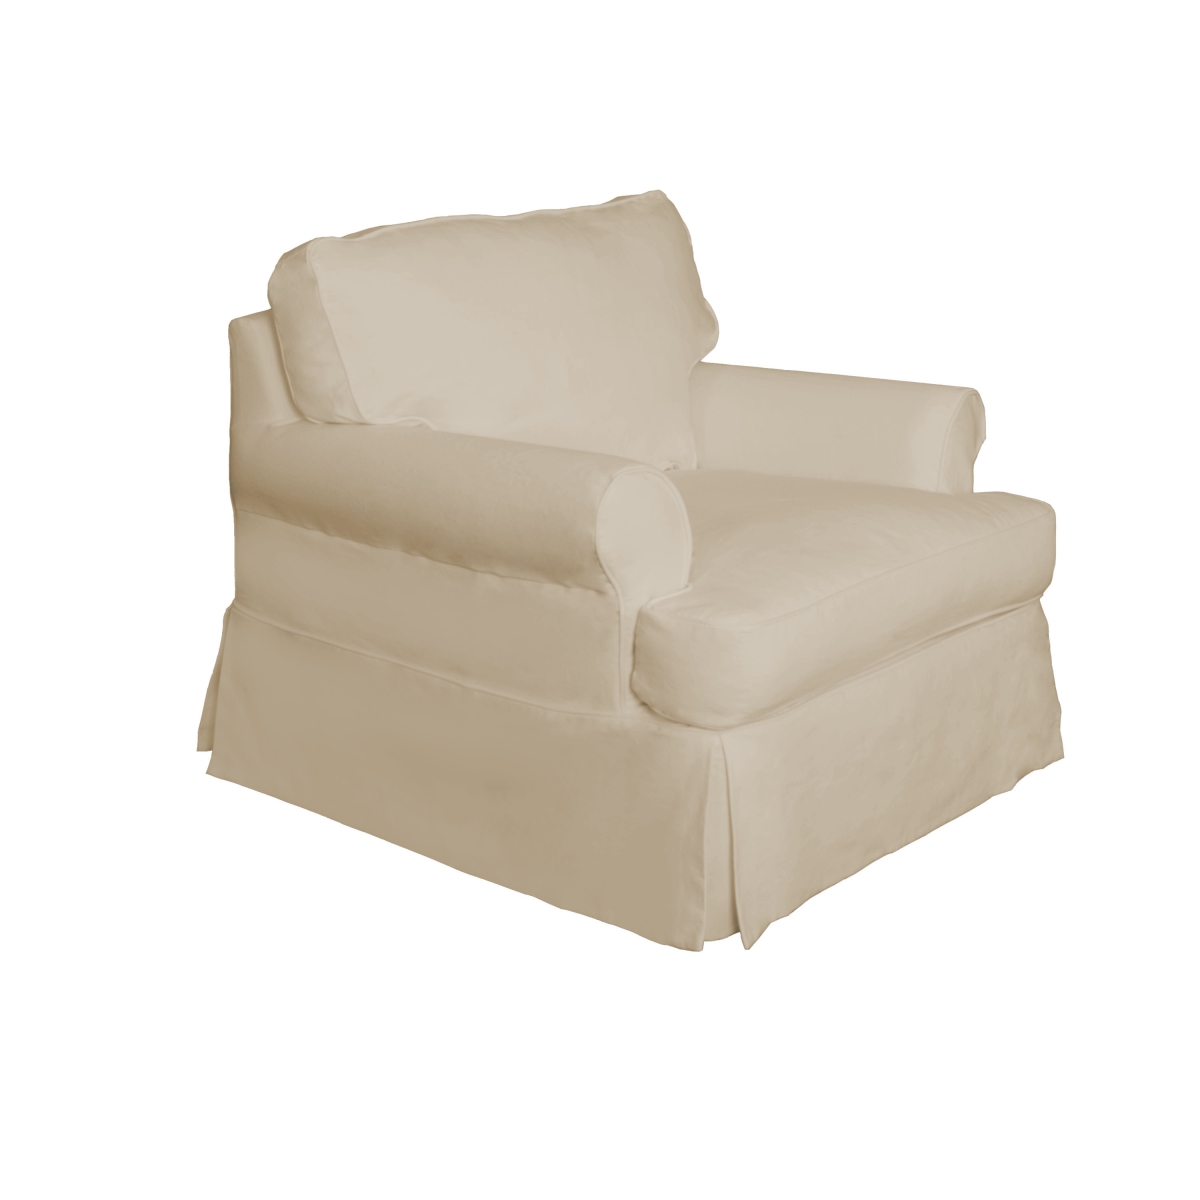 UPC 097652002629 product image for Sunset Trading SU-117620-391084 Horizon Slipcovered T-Cushion Chair Tan - 34 x 3 | upcitemdb.com